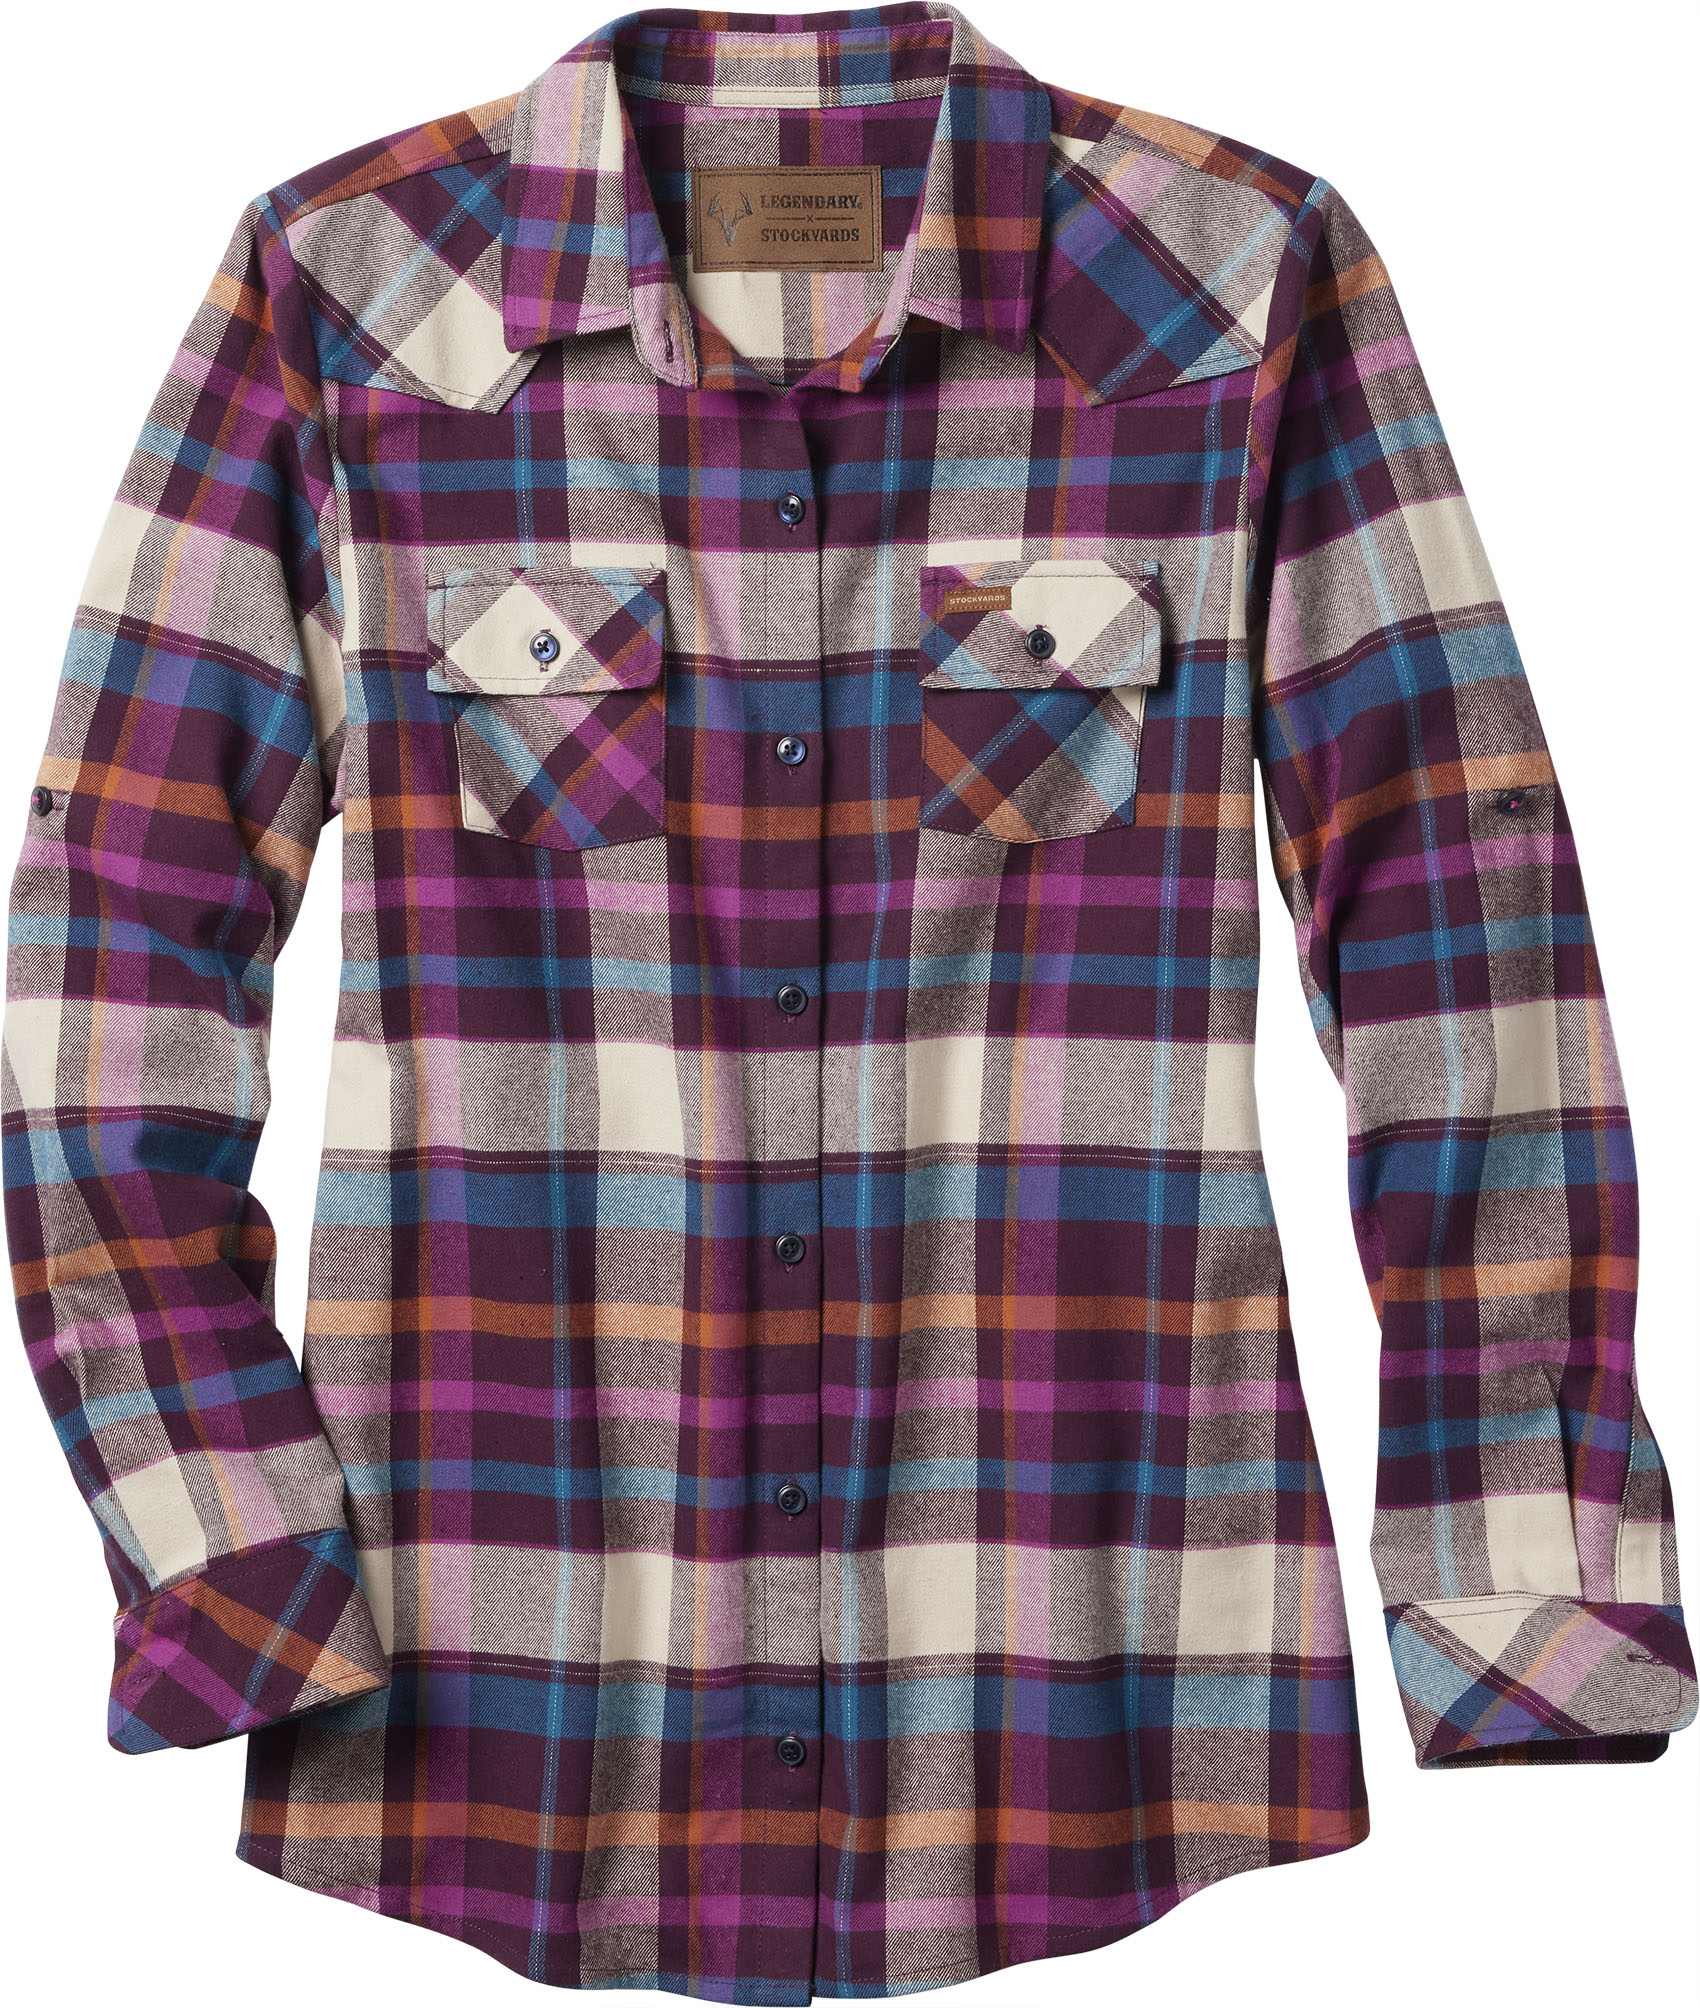 Shop Women's Stockyards Cinch Flannel Shirt | Legendary Whitetails